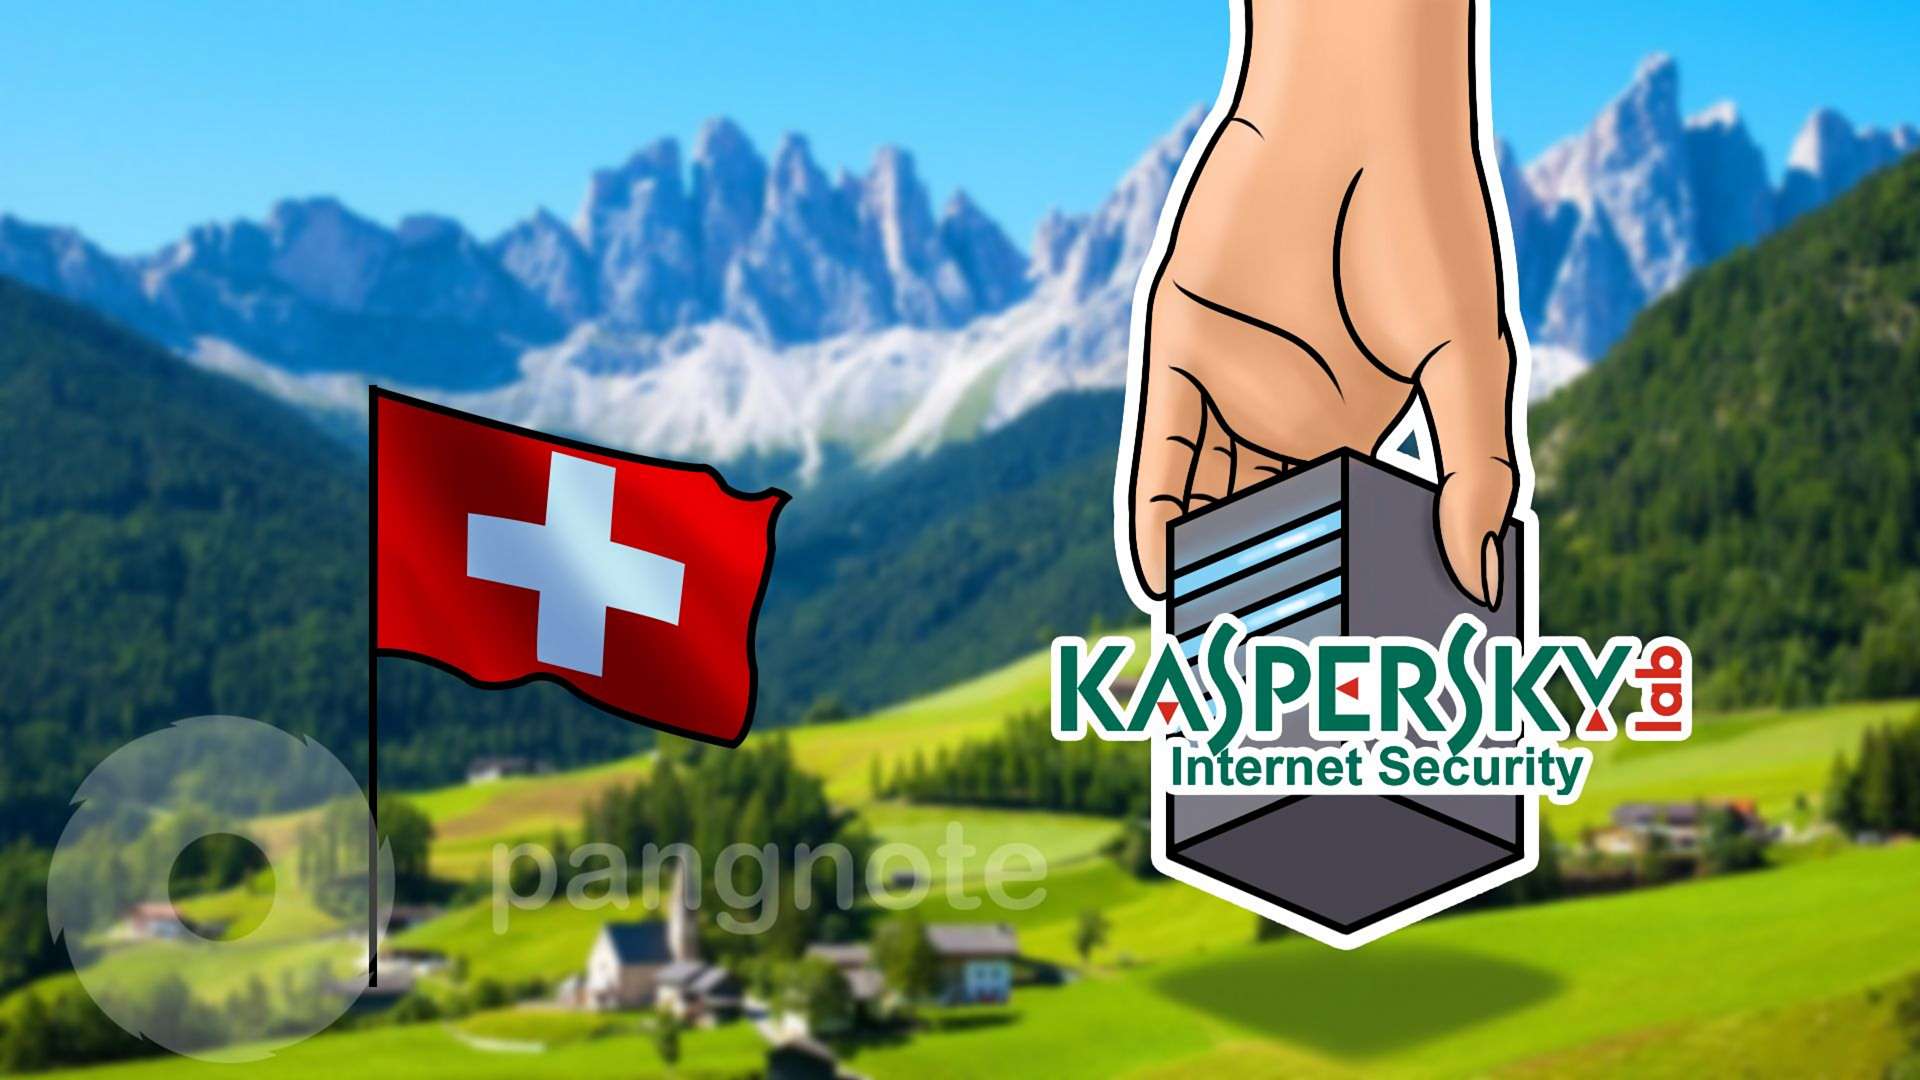 Kaspersky Lab is building a data center in Switzerland